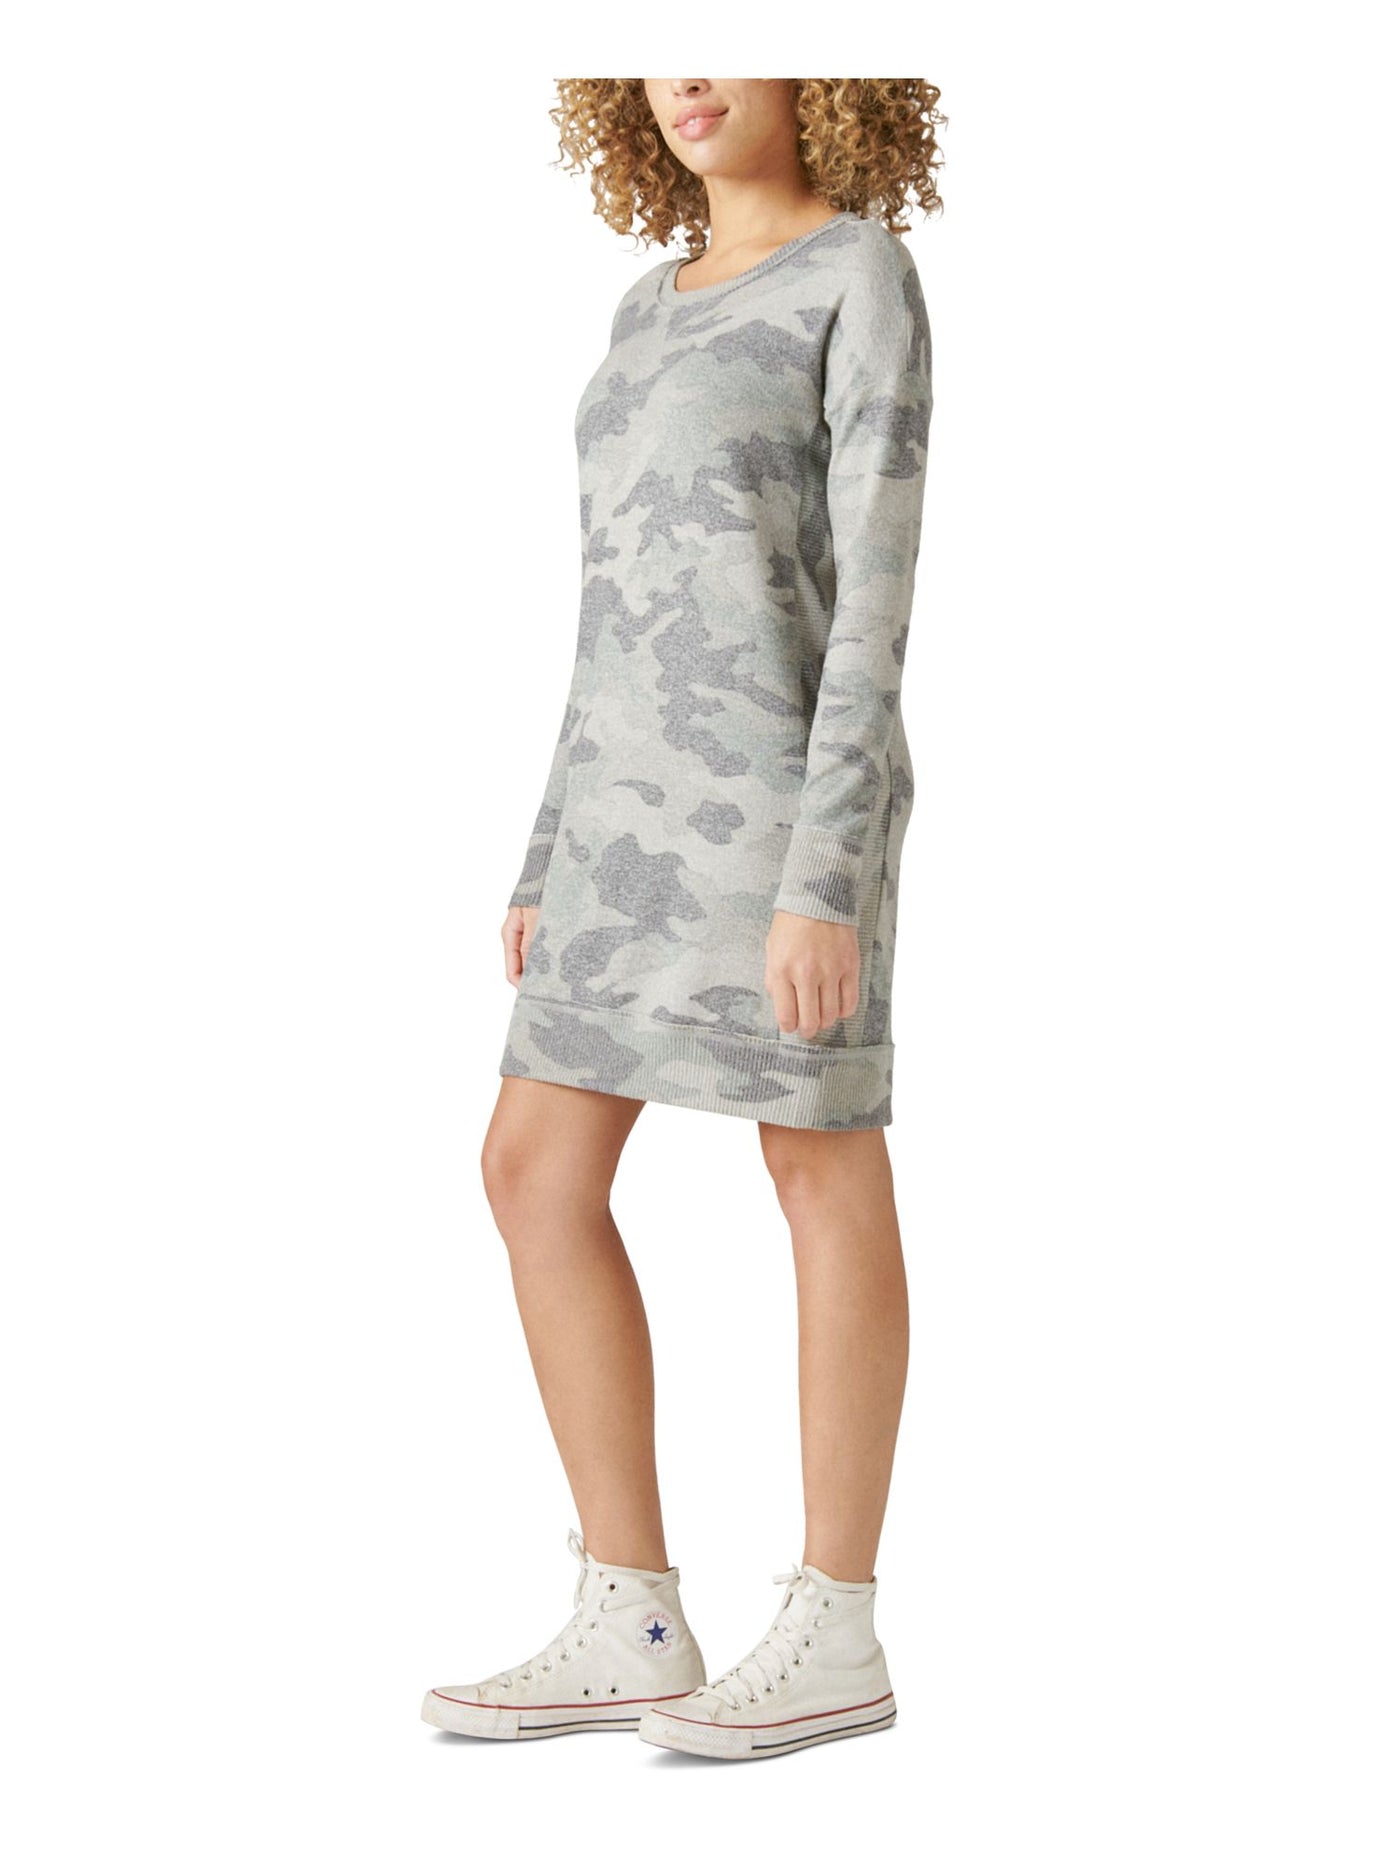 LUCKY BRAND Womens Gray Camouflage Long Sleeve Crew Neck Short Sweatshirt Dress M